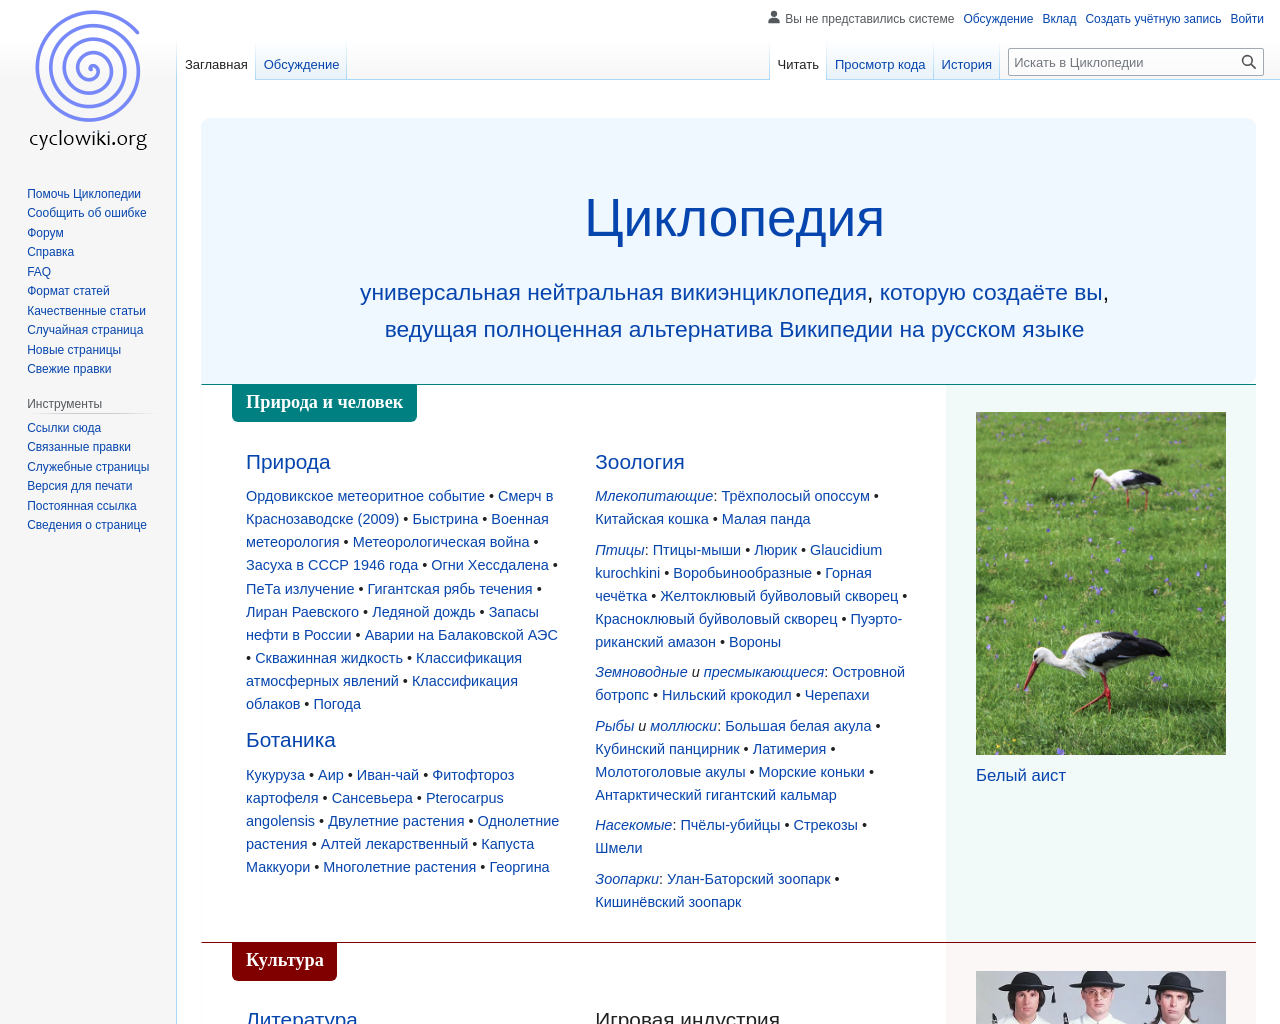 cyclowiki.org